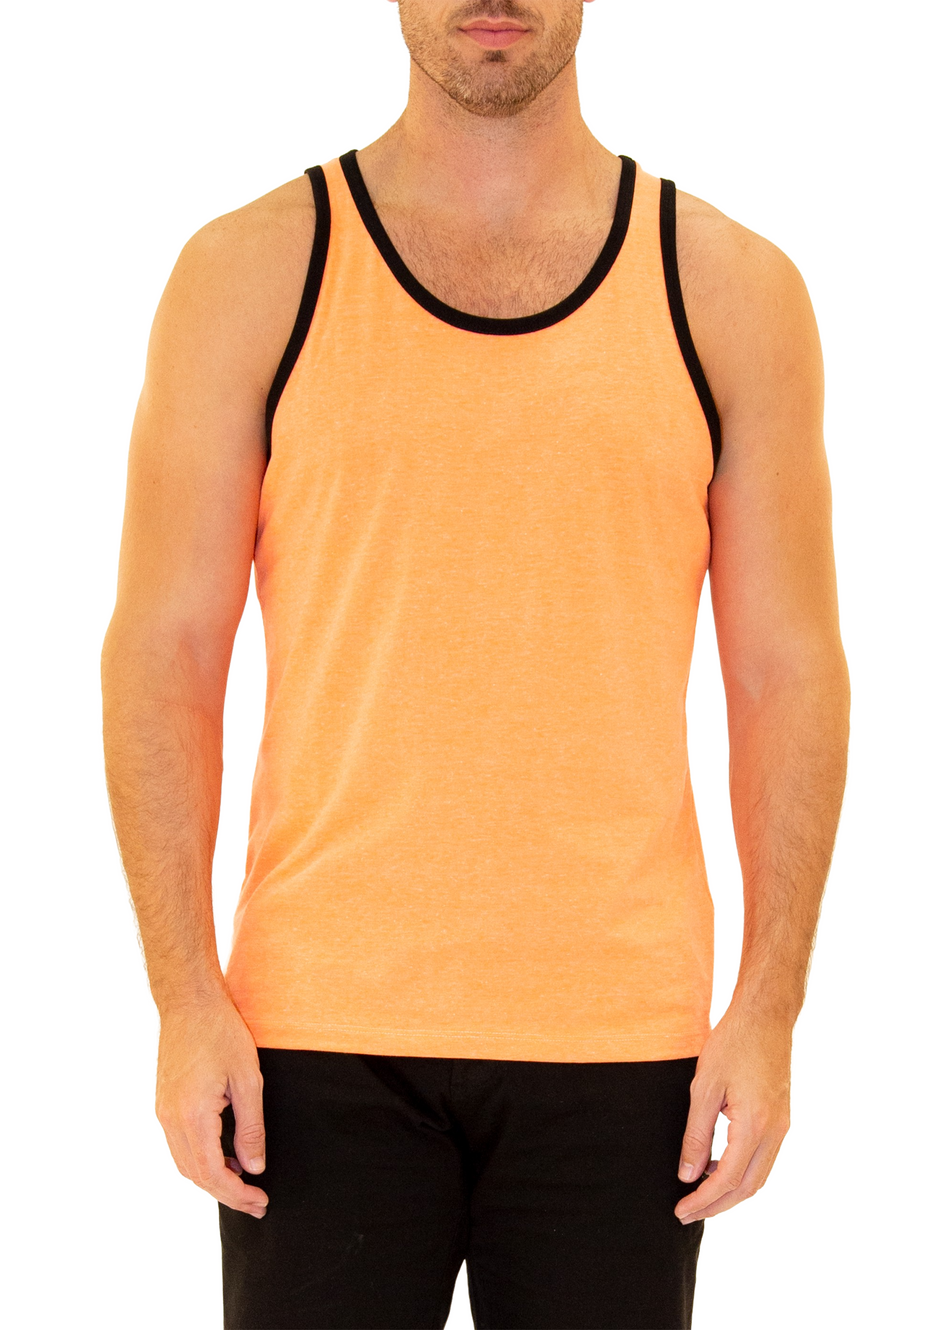 201023 - Men's Neon Orange Cotton Tank Top